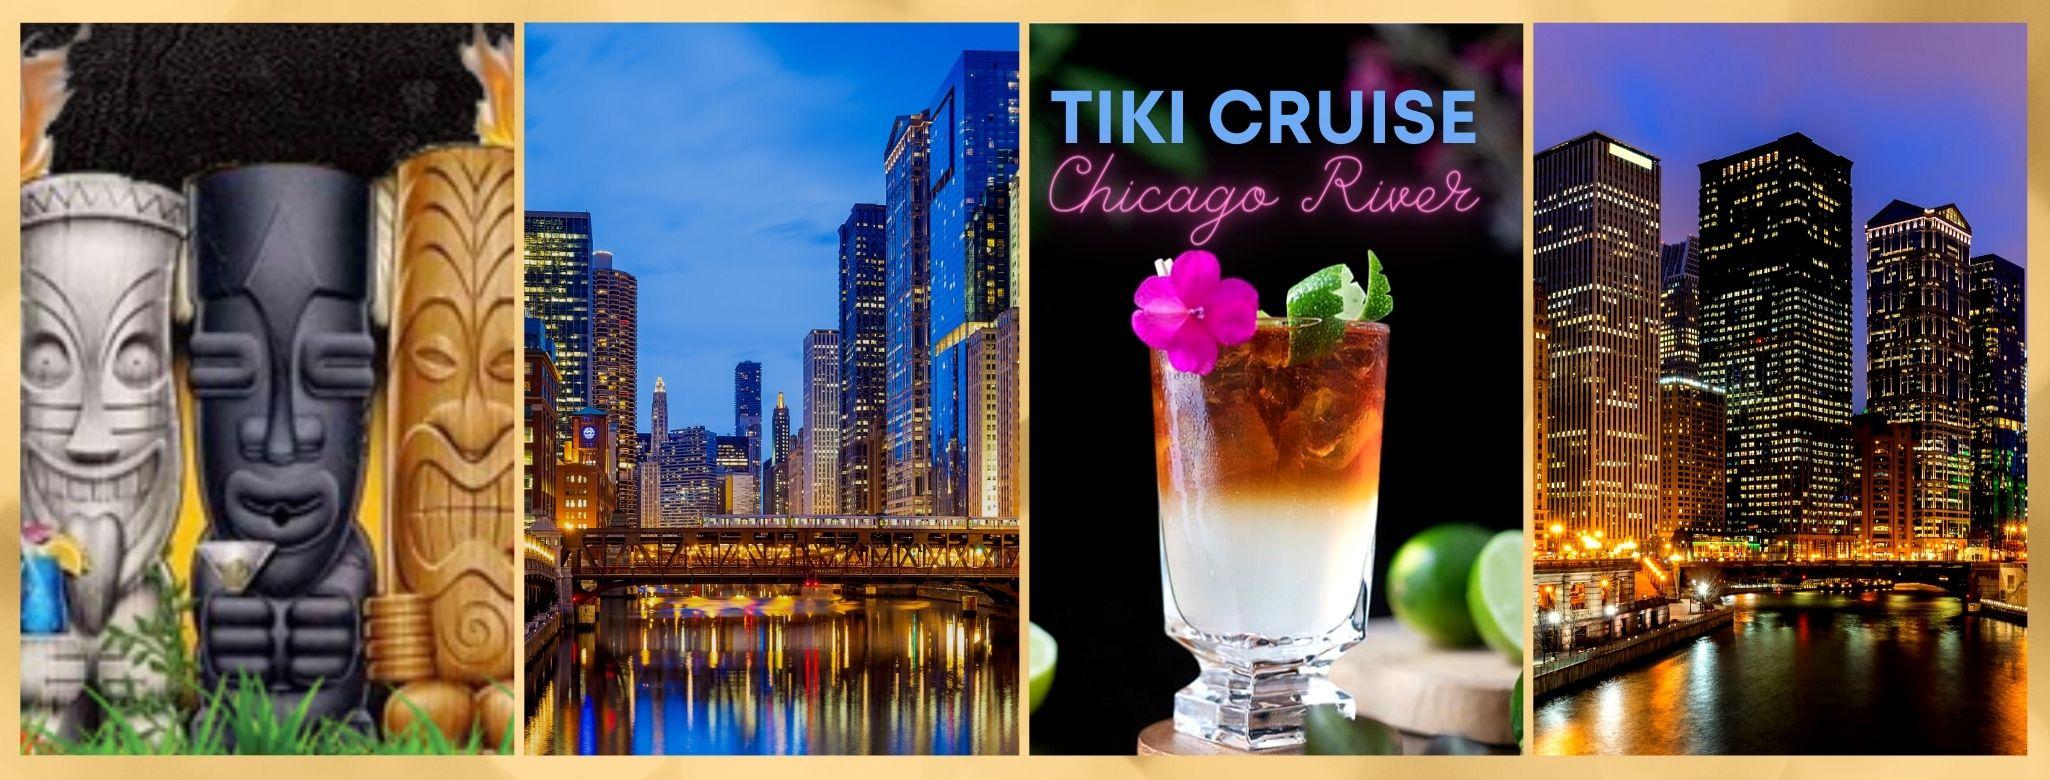 Chicago River Tiki Cruise